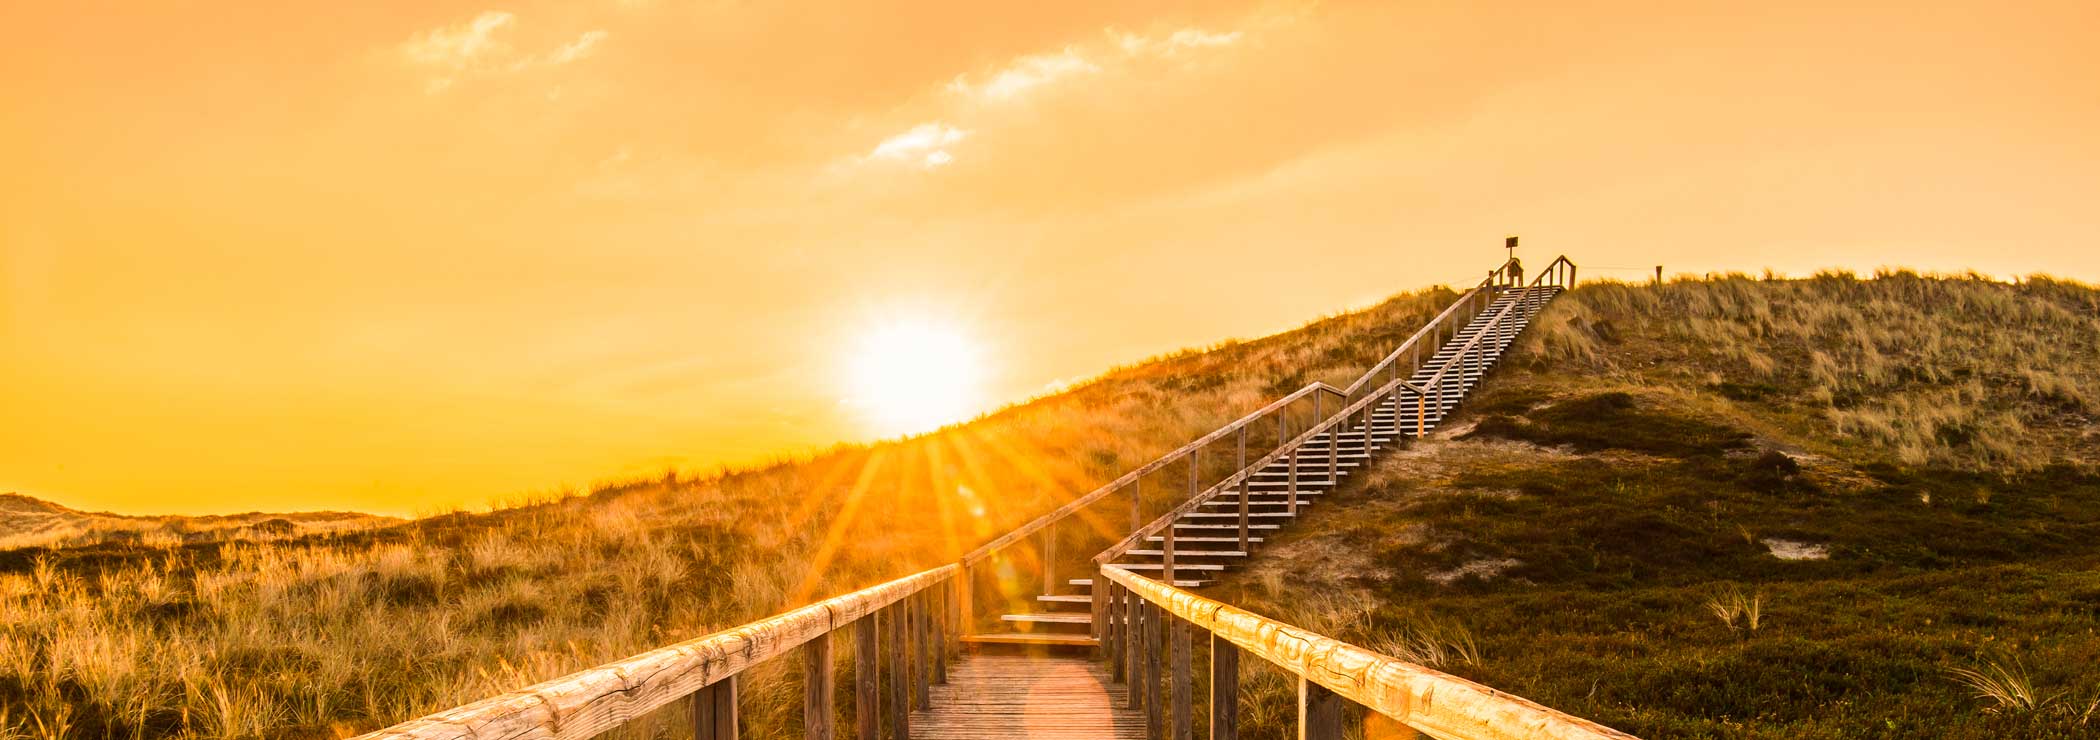 Treppe am Strand mit Sonnenuntergang